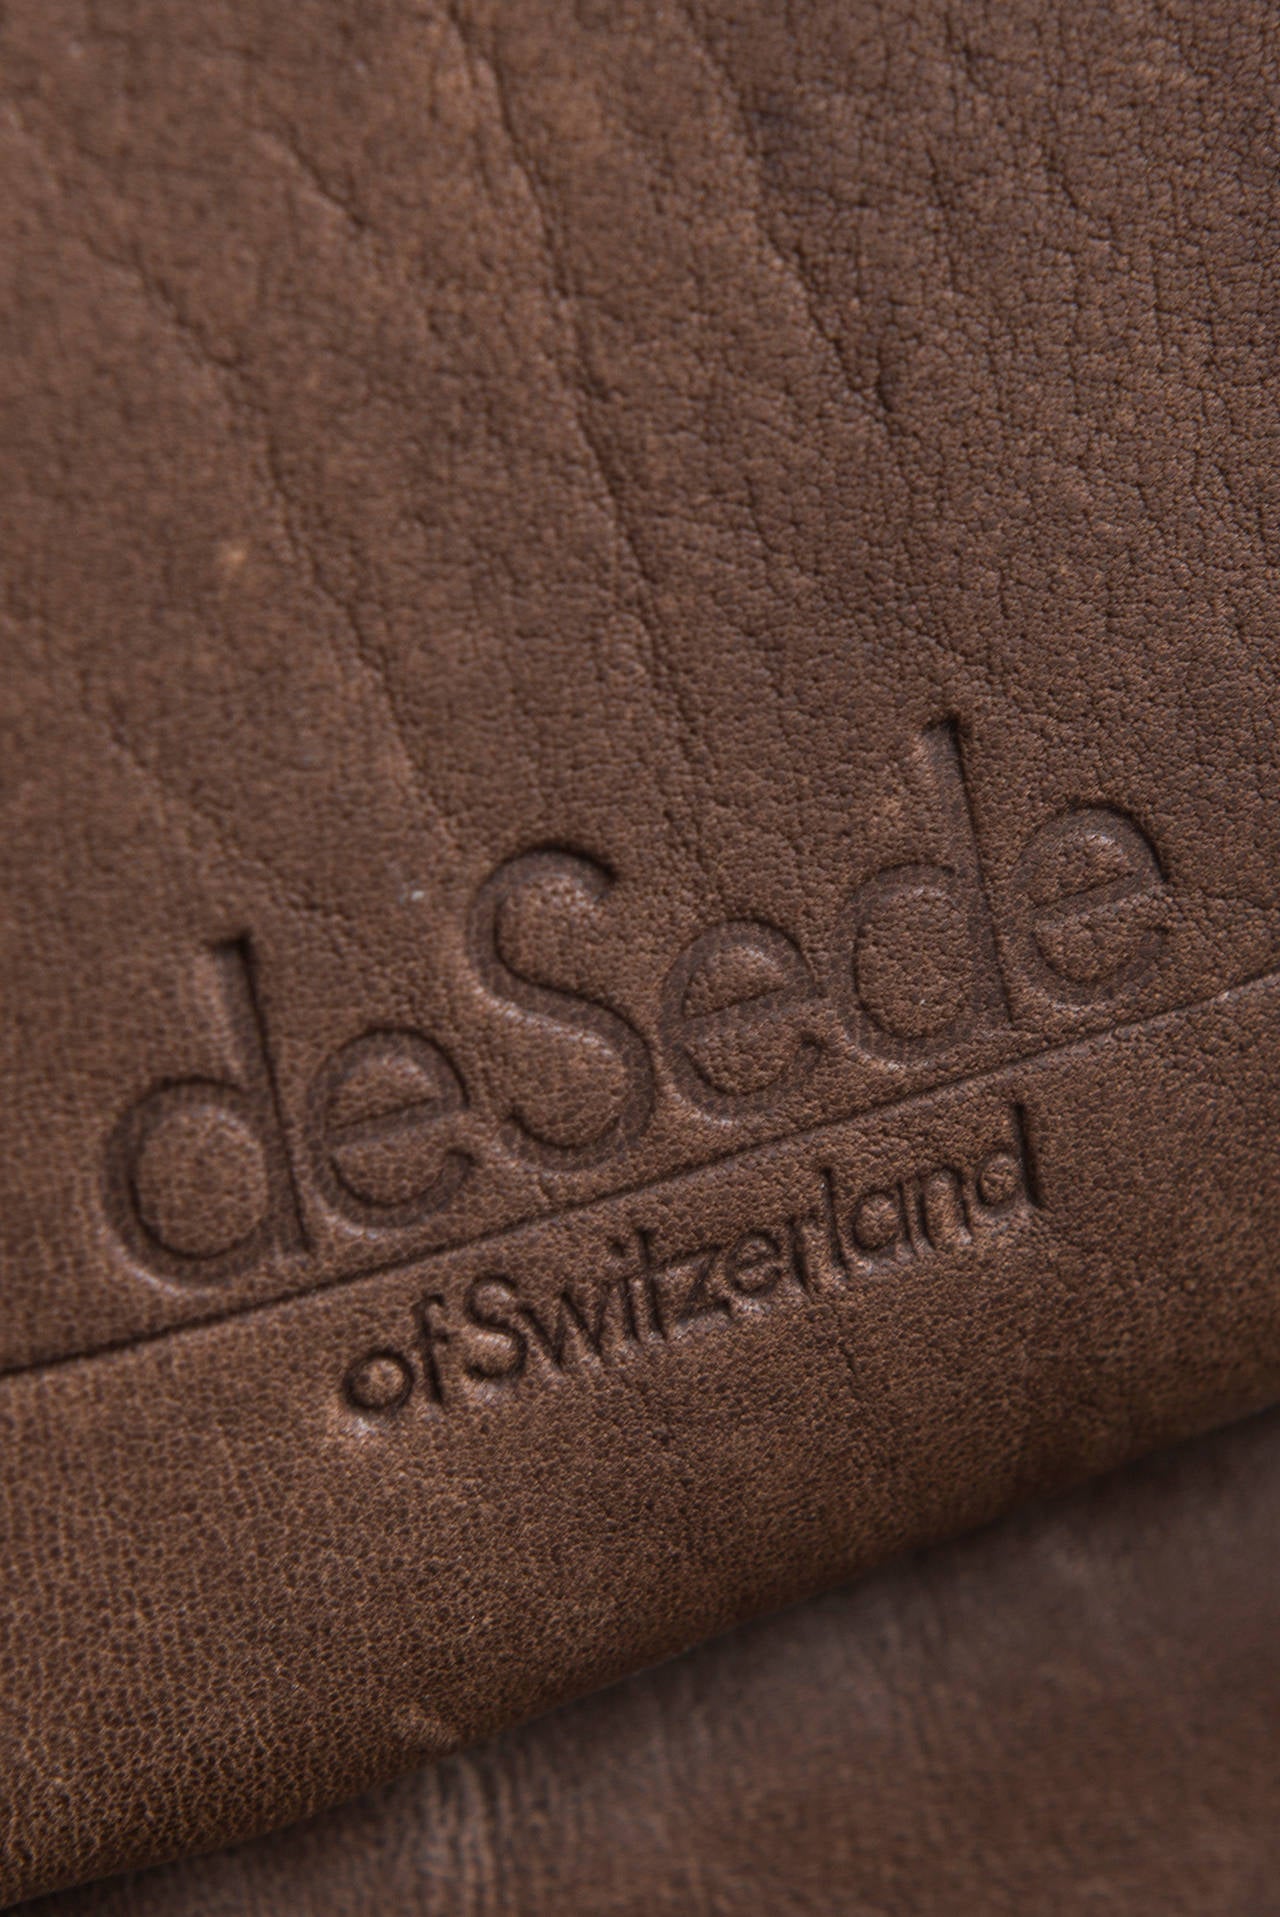 de Sede easy chair with stool by de Sede in Switzerland 1